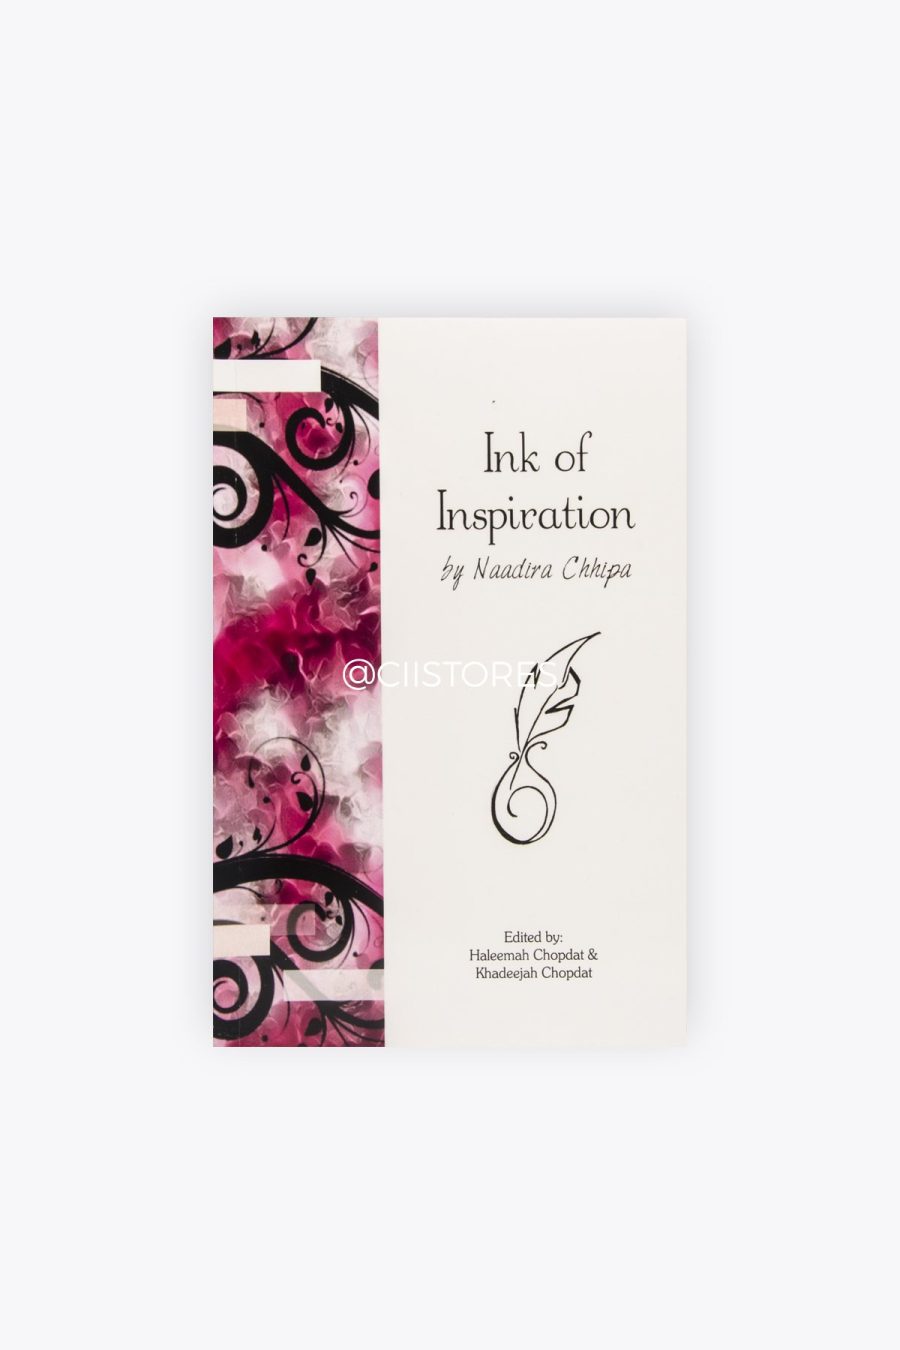 Ink of Inspiration by Naadira Chhipa